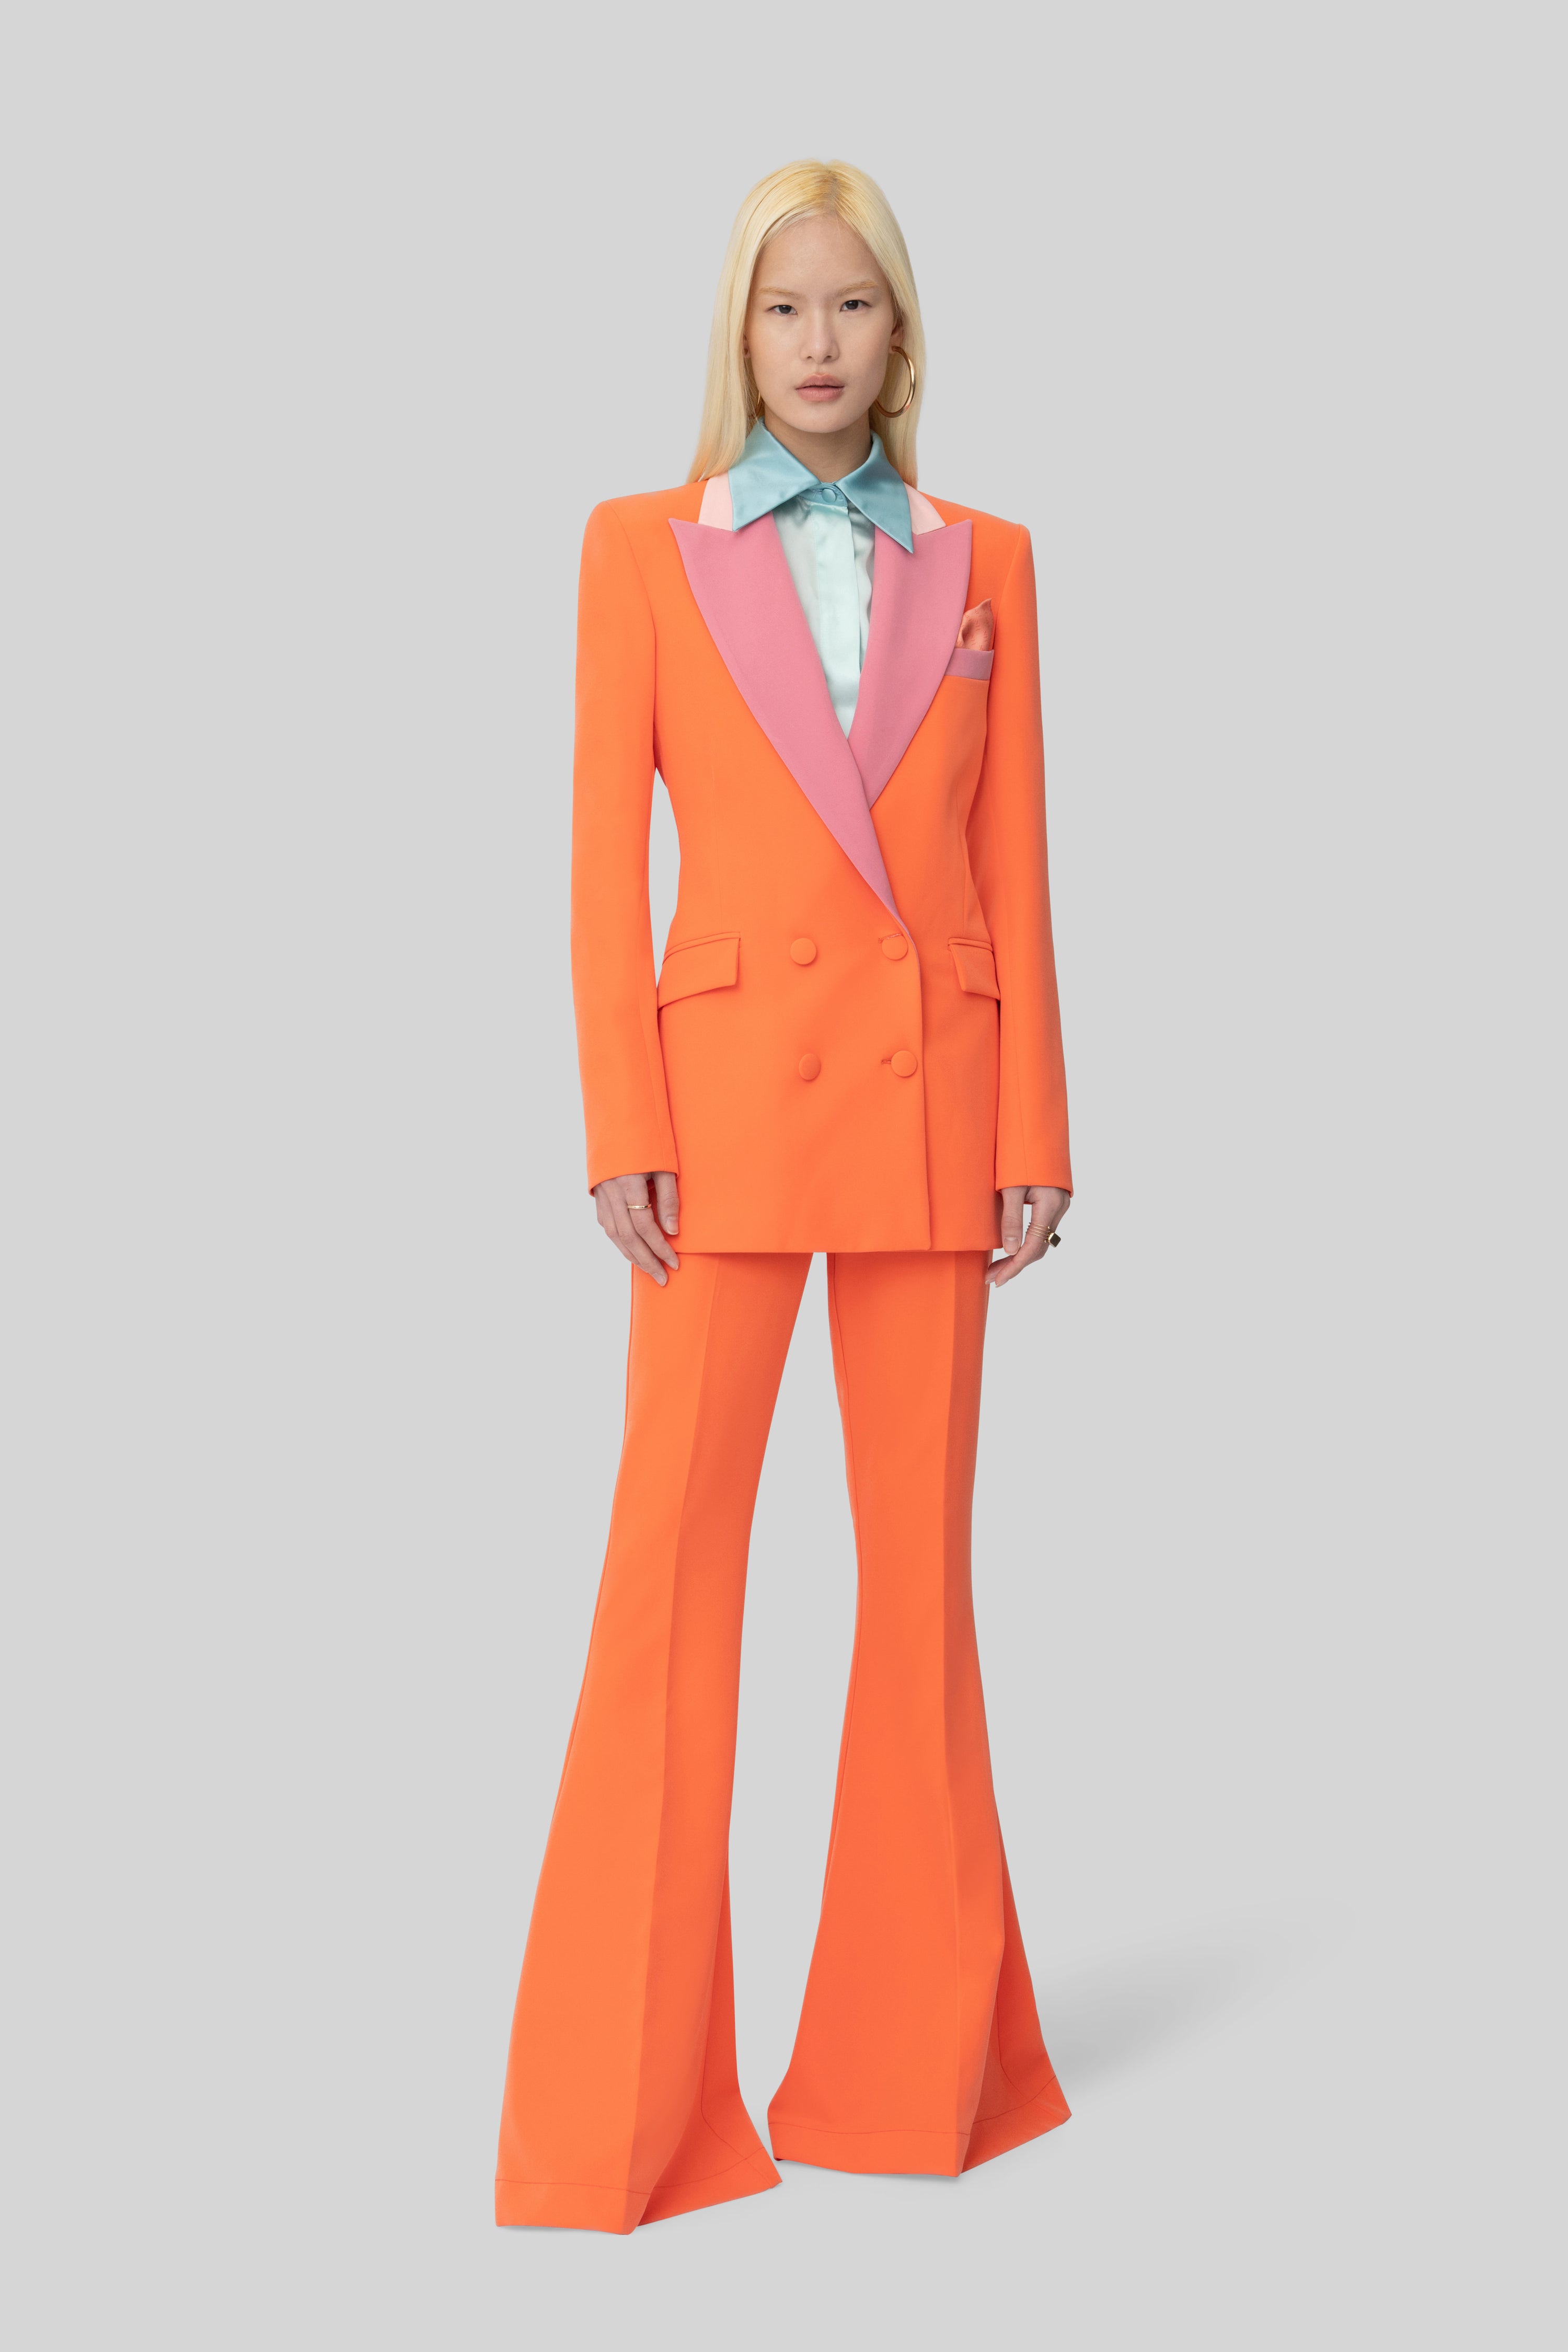 The Orange & Pink Neo-Crepe Bianca Blazer